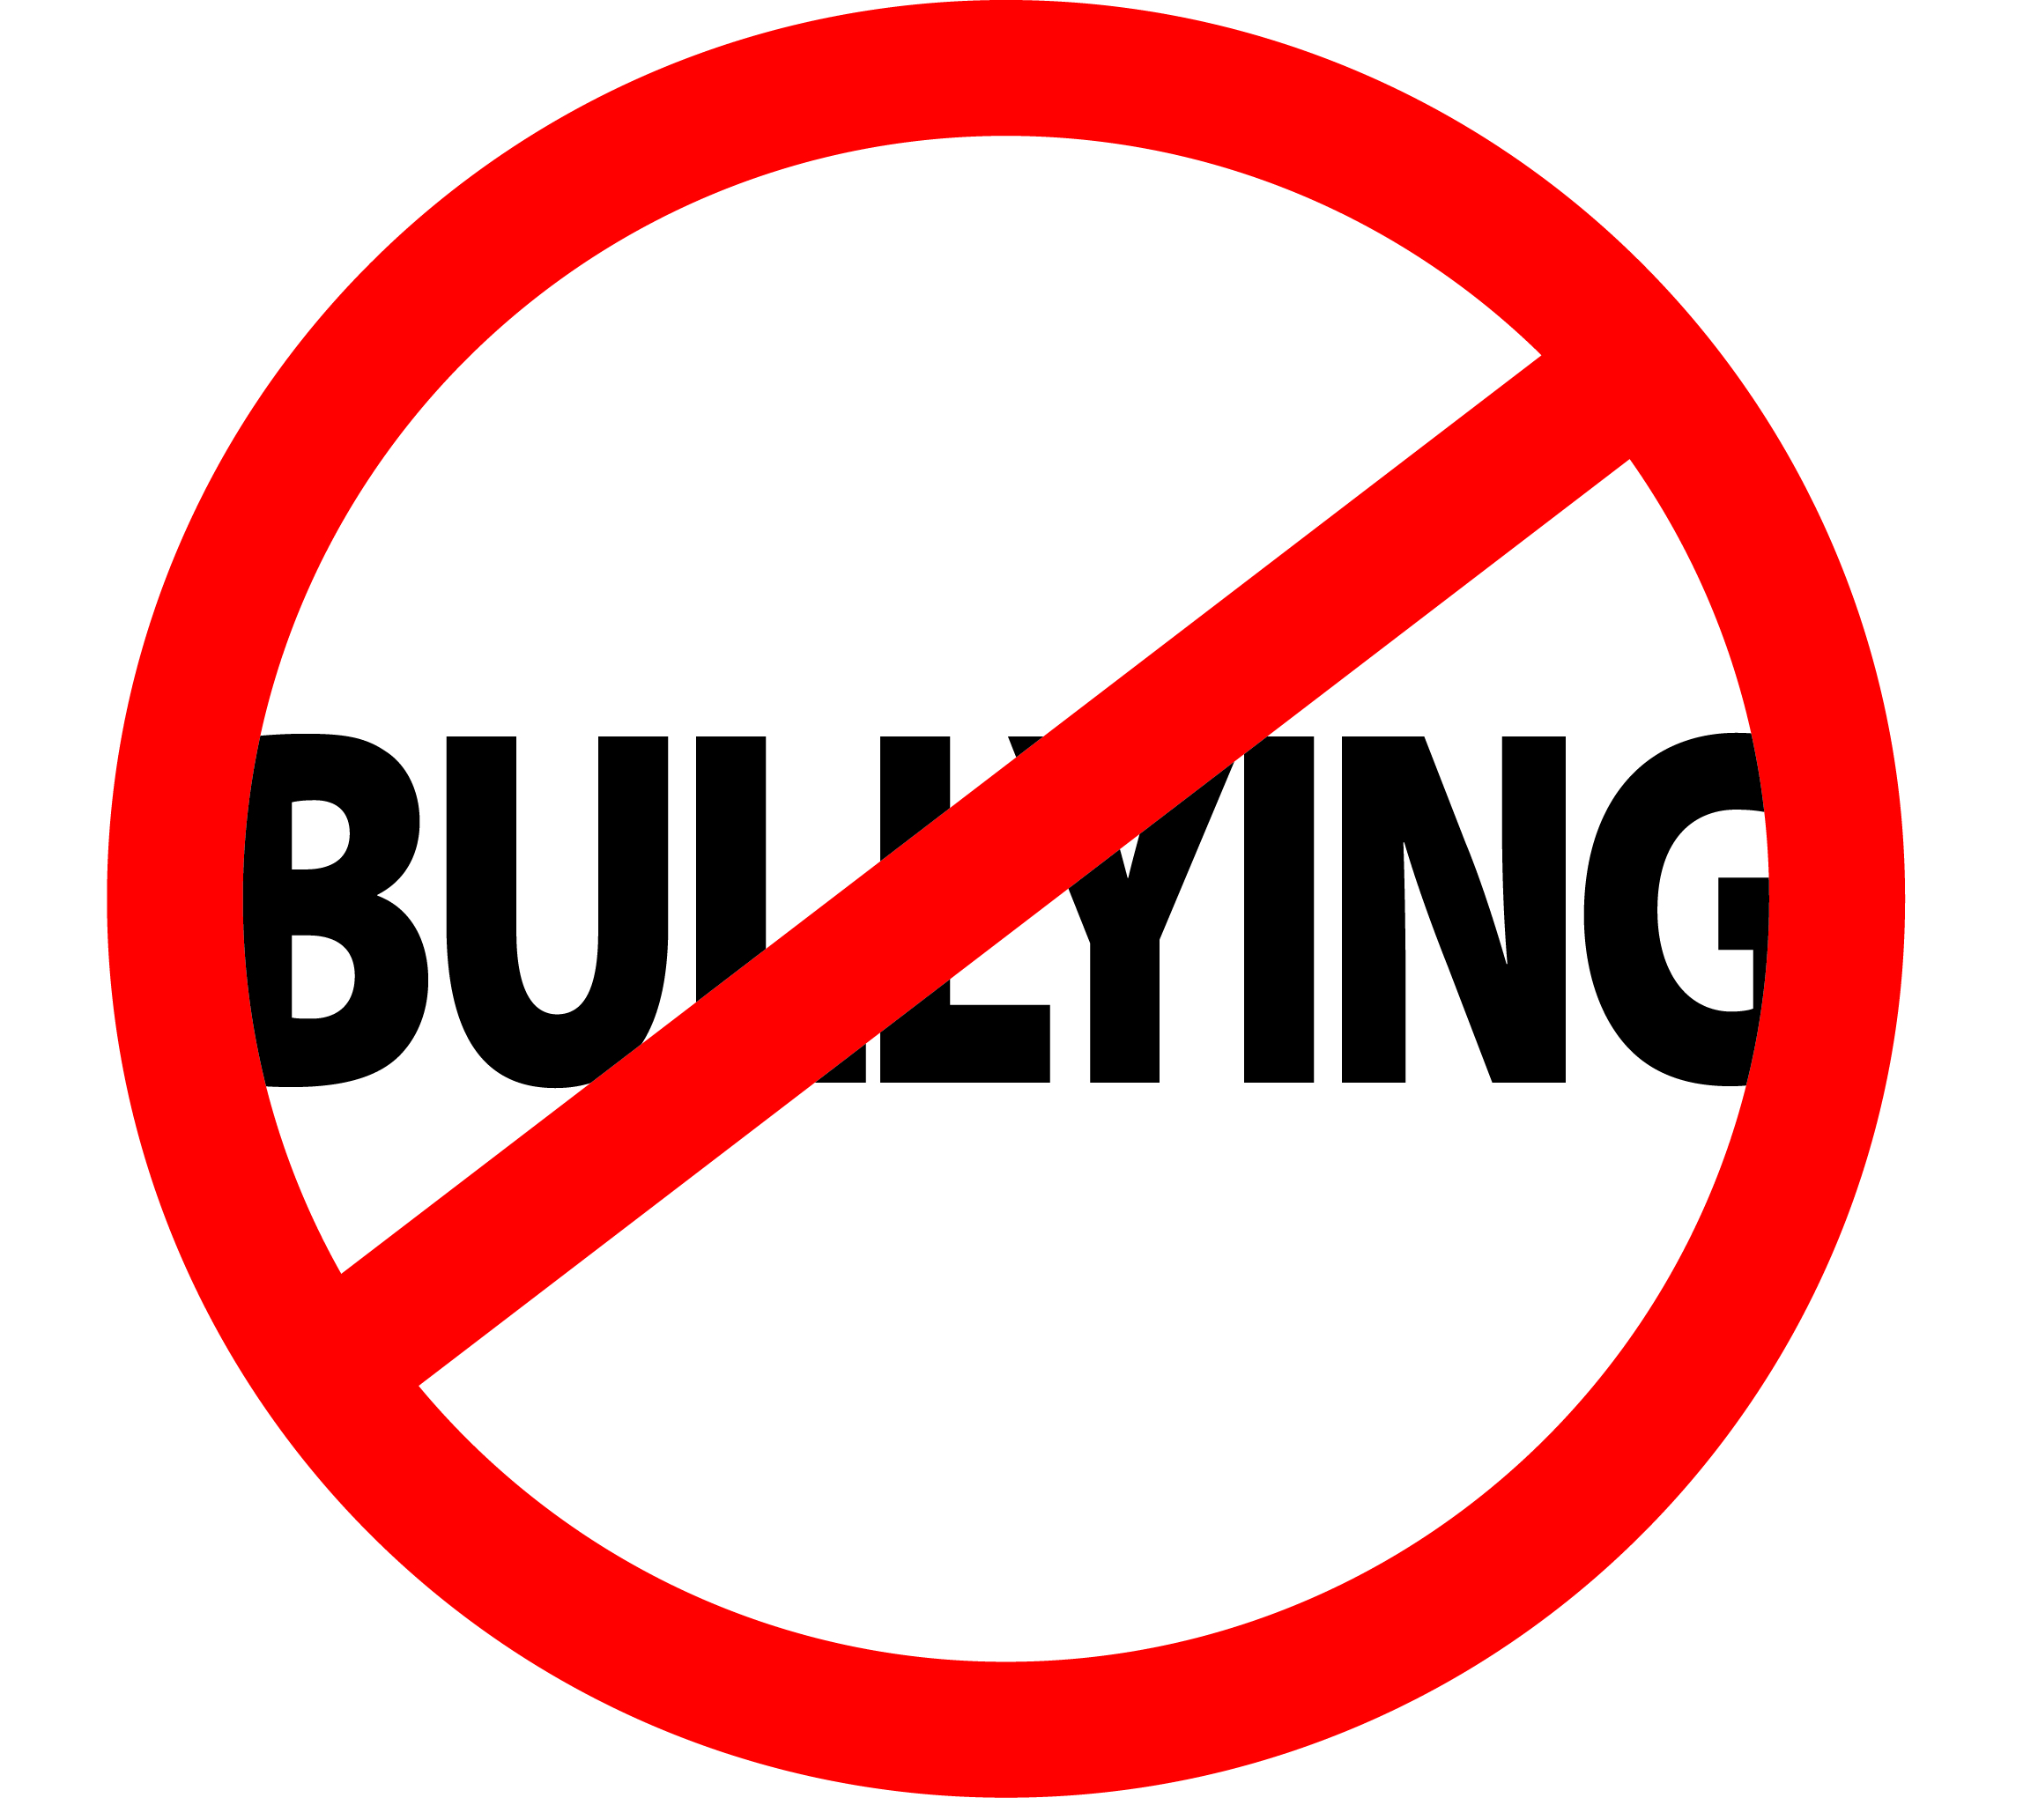 Inspirational Bullying is a Crime Anti Bullying T-Shirt